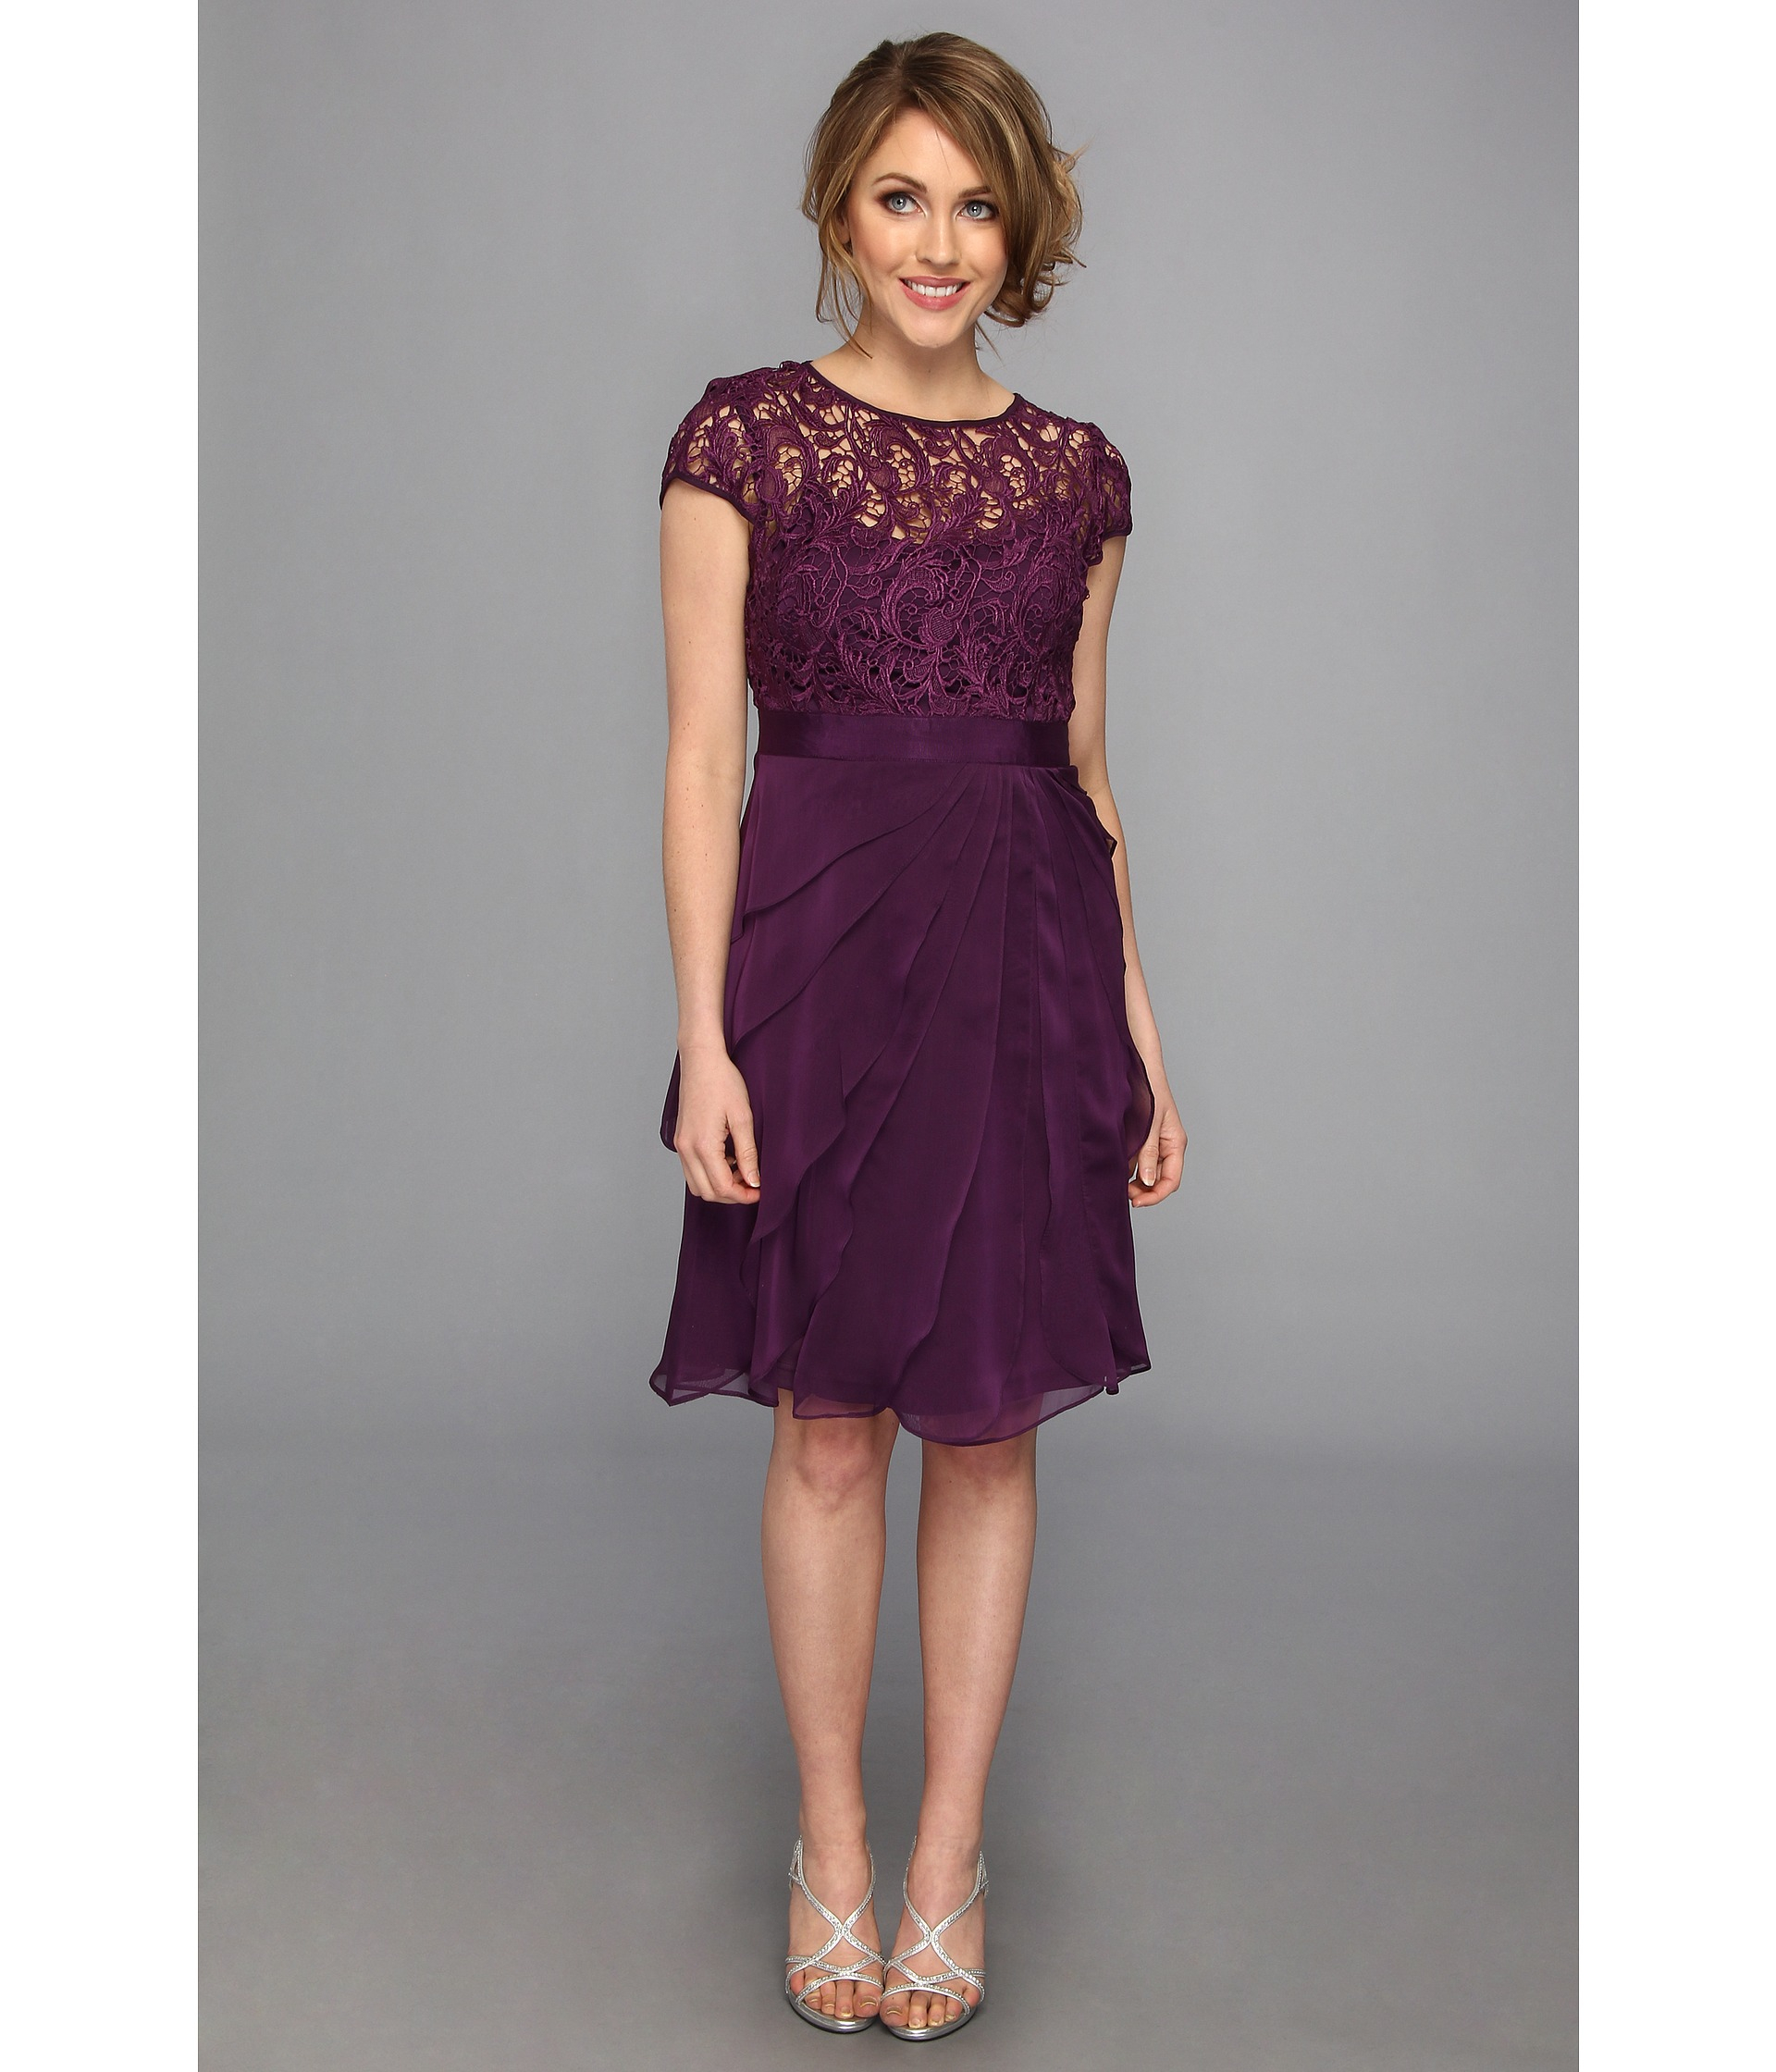 Adrianna Papell Purple Lace Dress Hotsell, 57% OFF | www.digitaldev.com.br